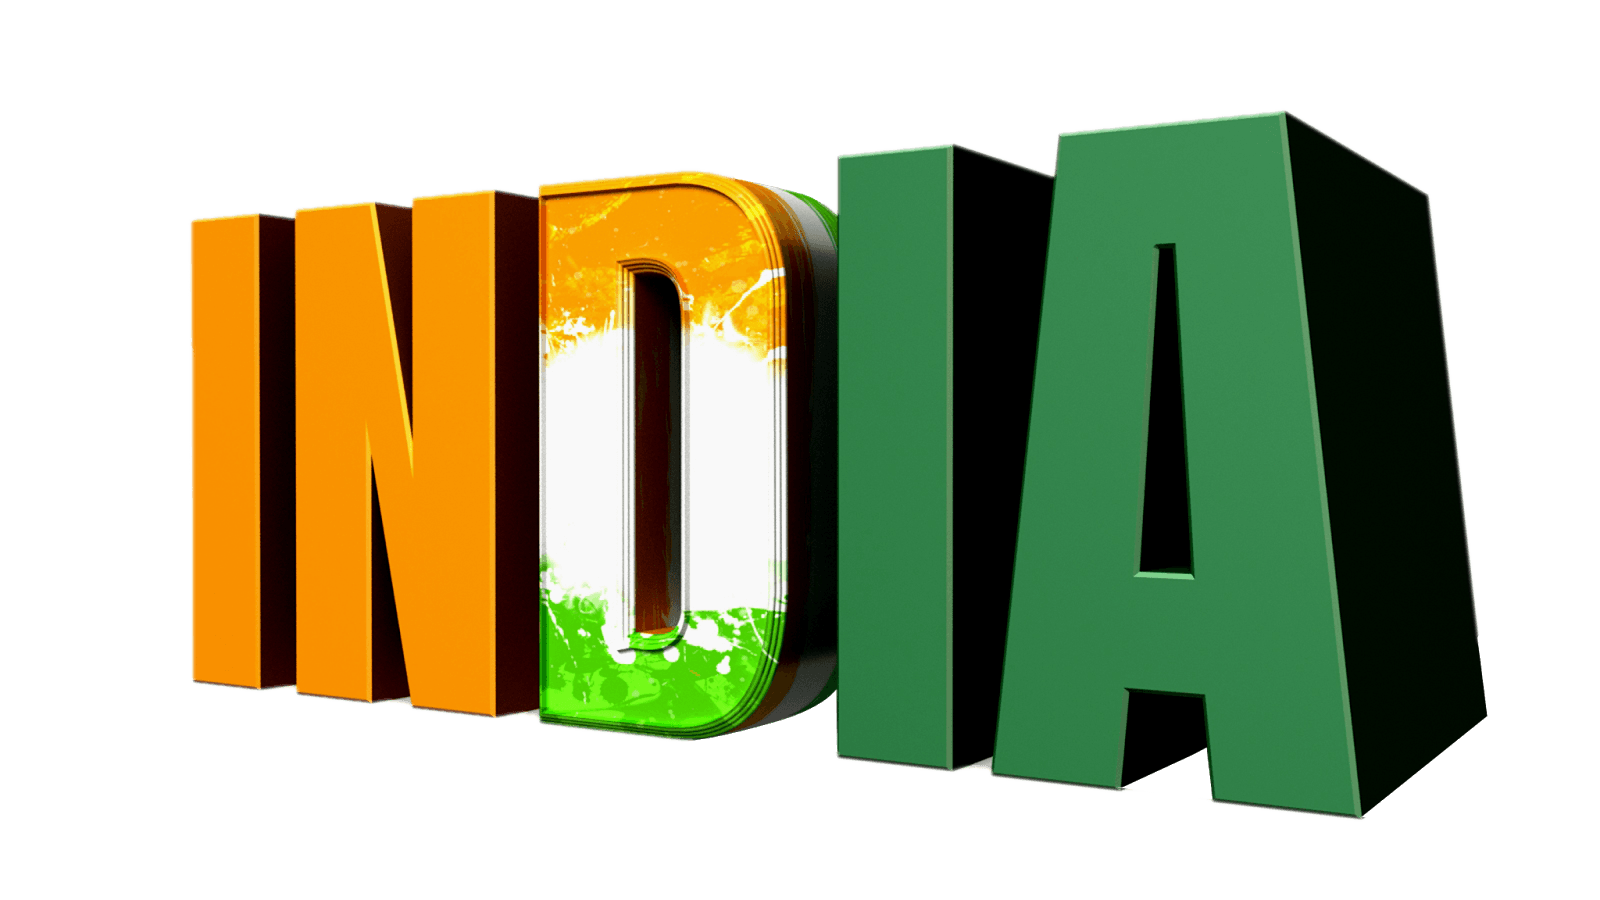 pngforall: india 3D logo with flag color design Transparent image